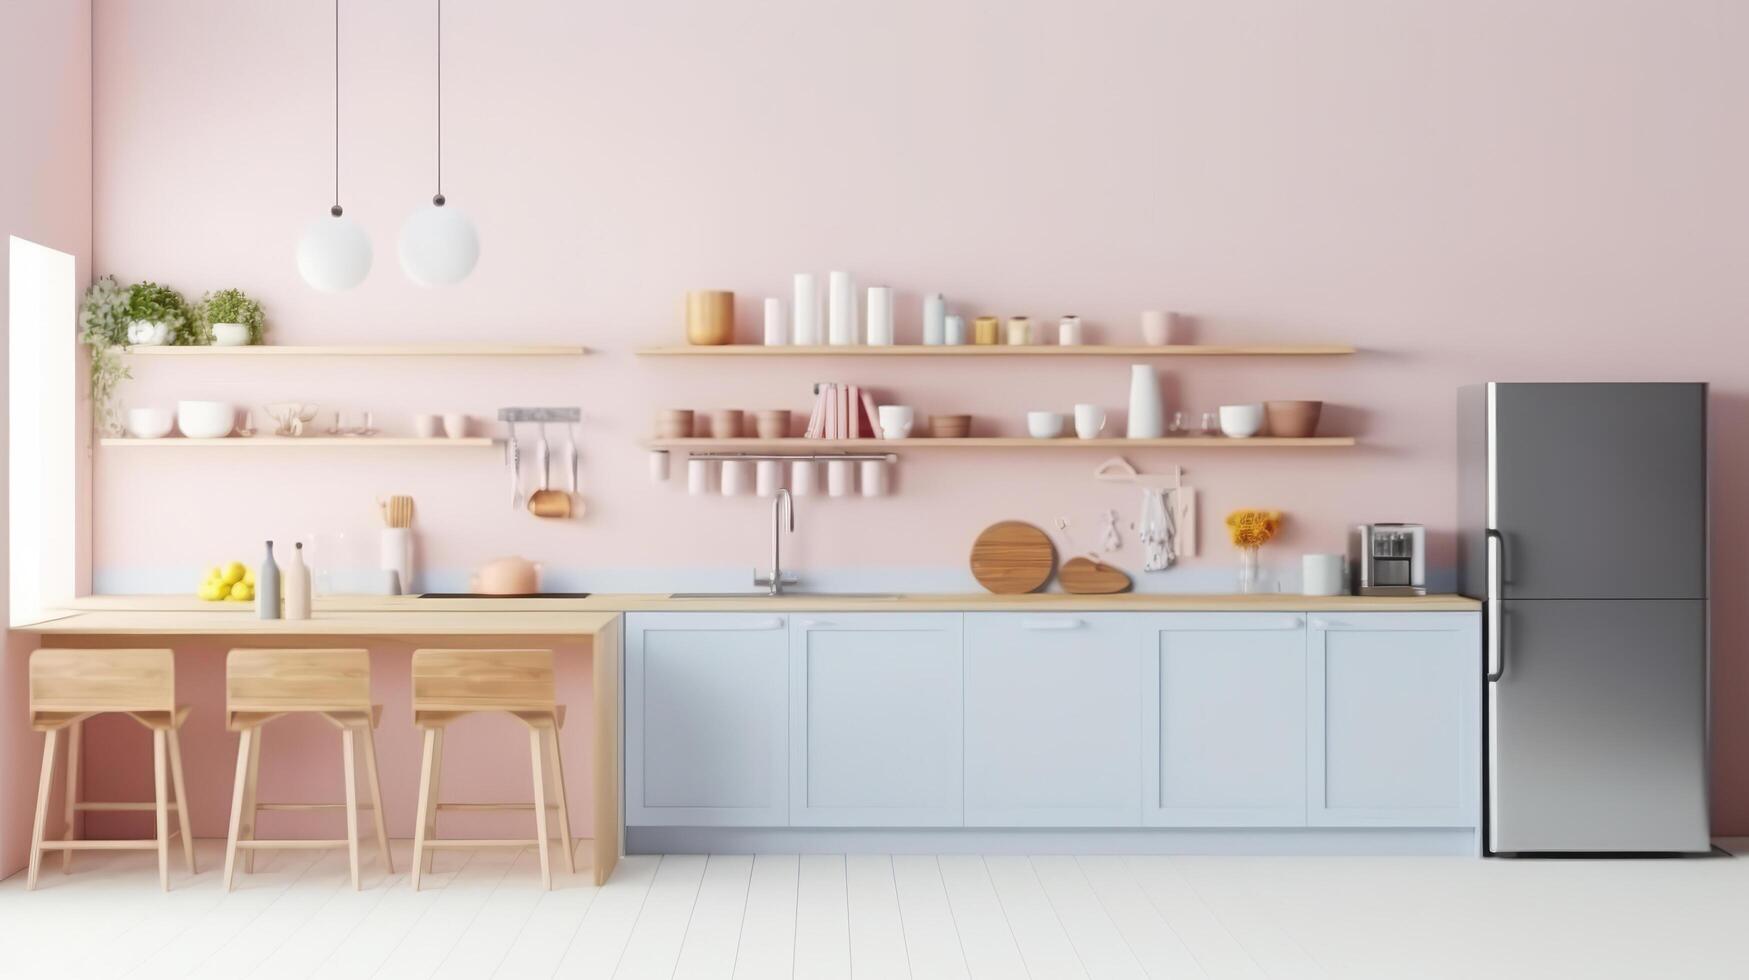 Modern kitchen in pastel colors. Illustration photo